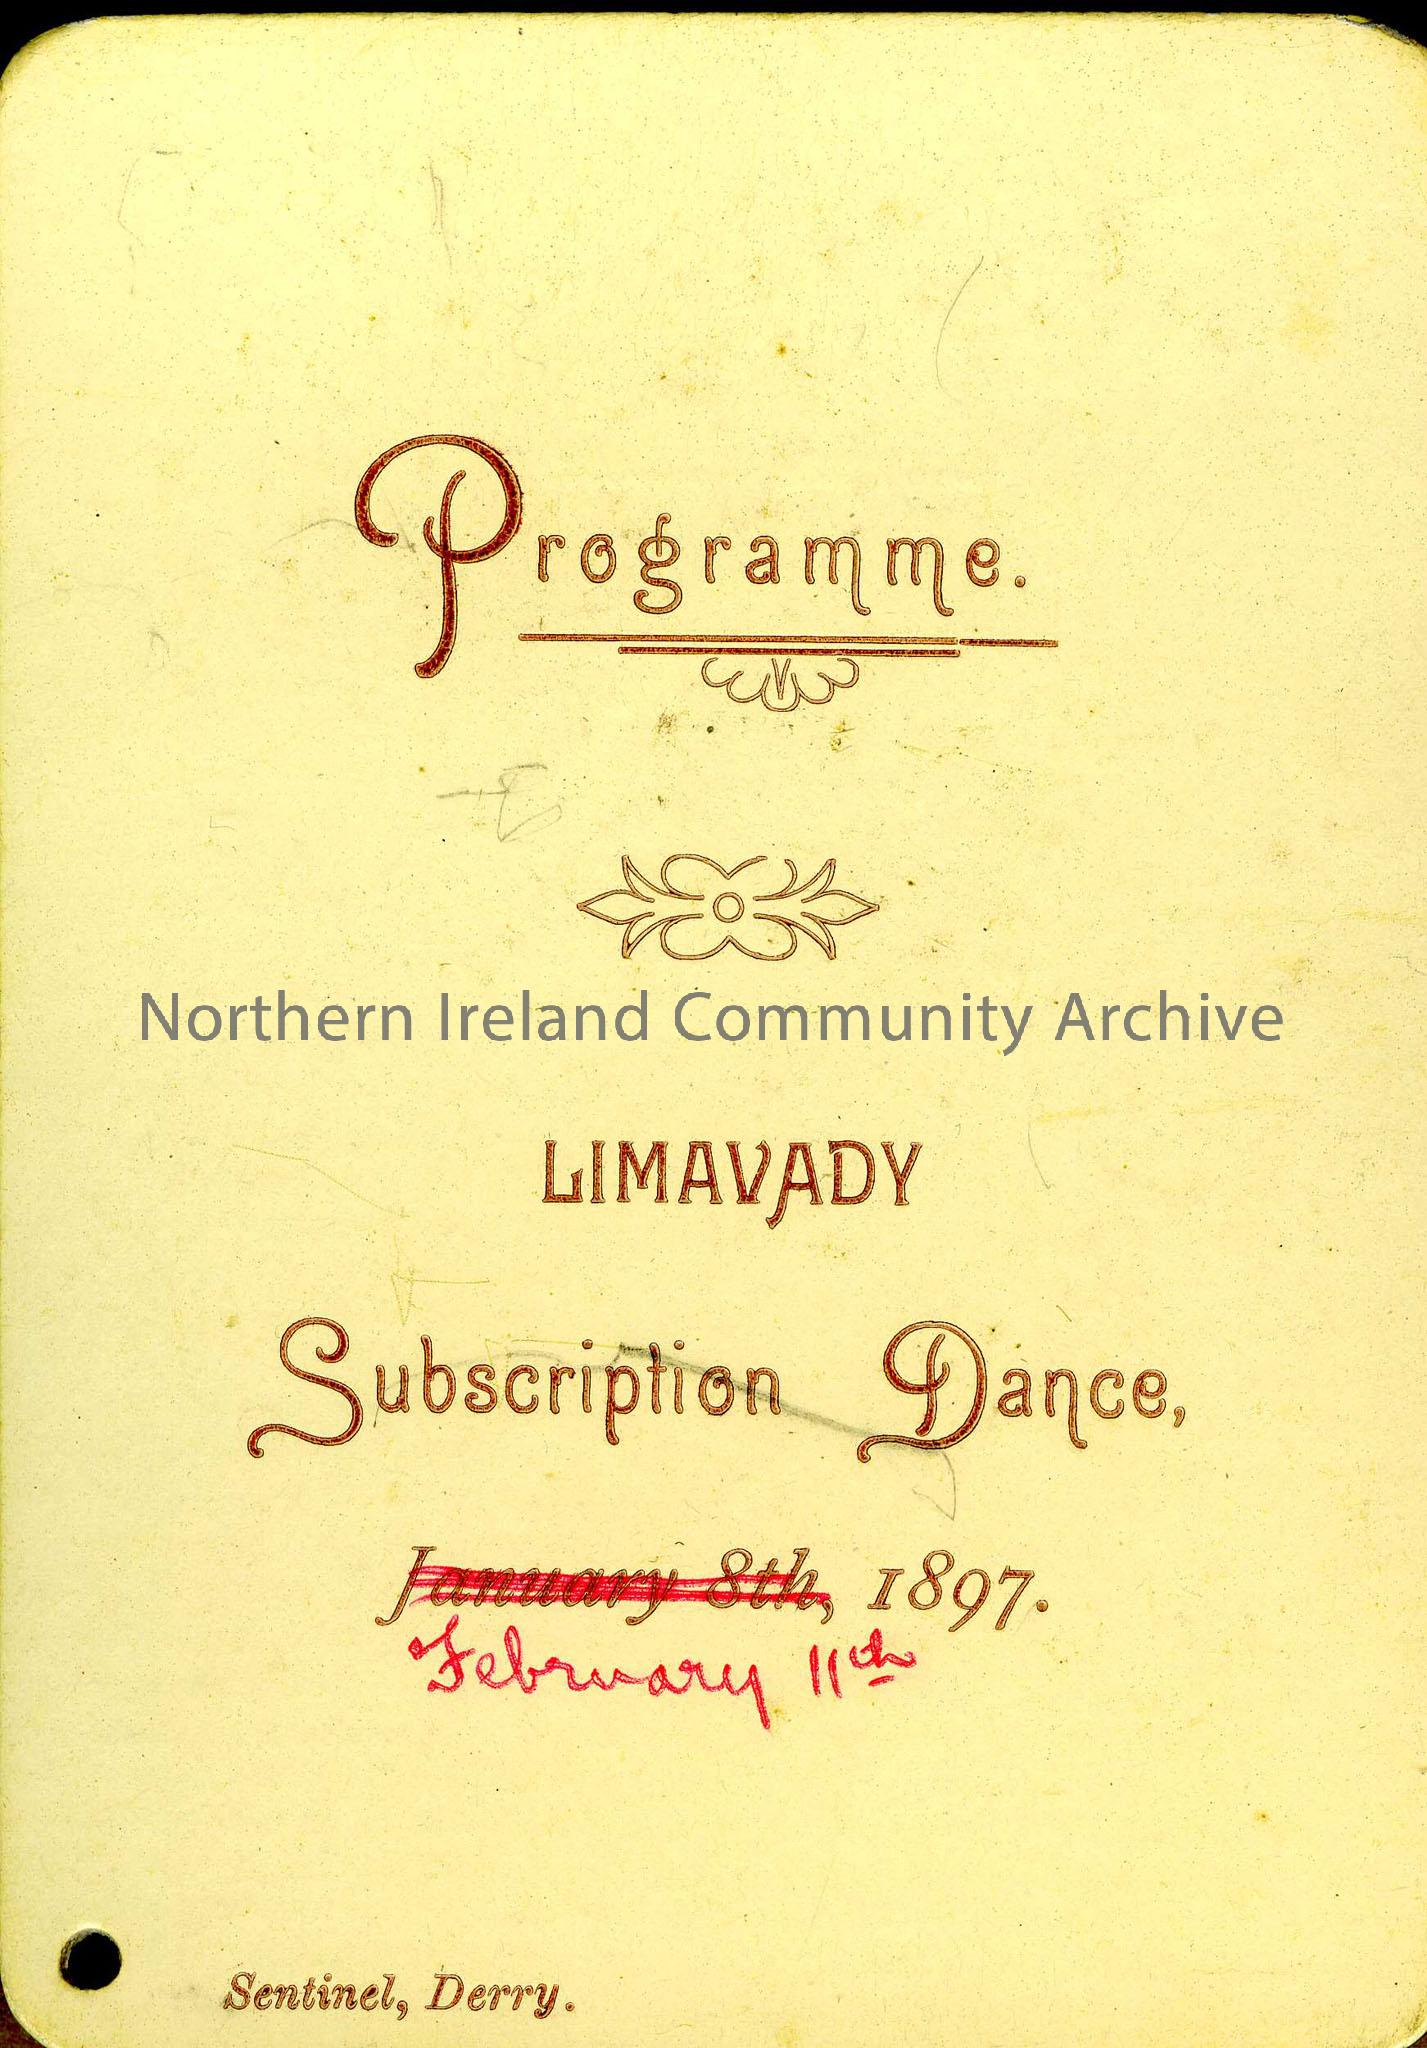 Dance card or programme. Limavady Subscription Dance, 11th February 1897.